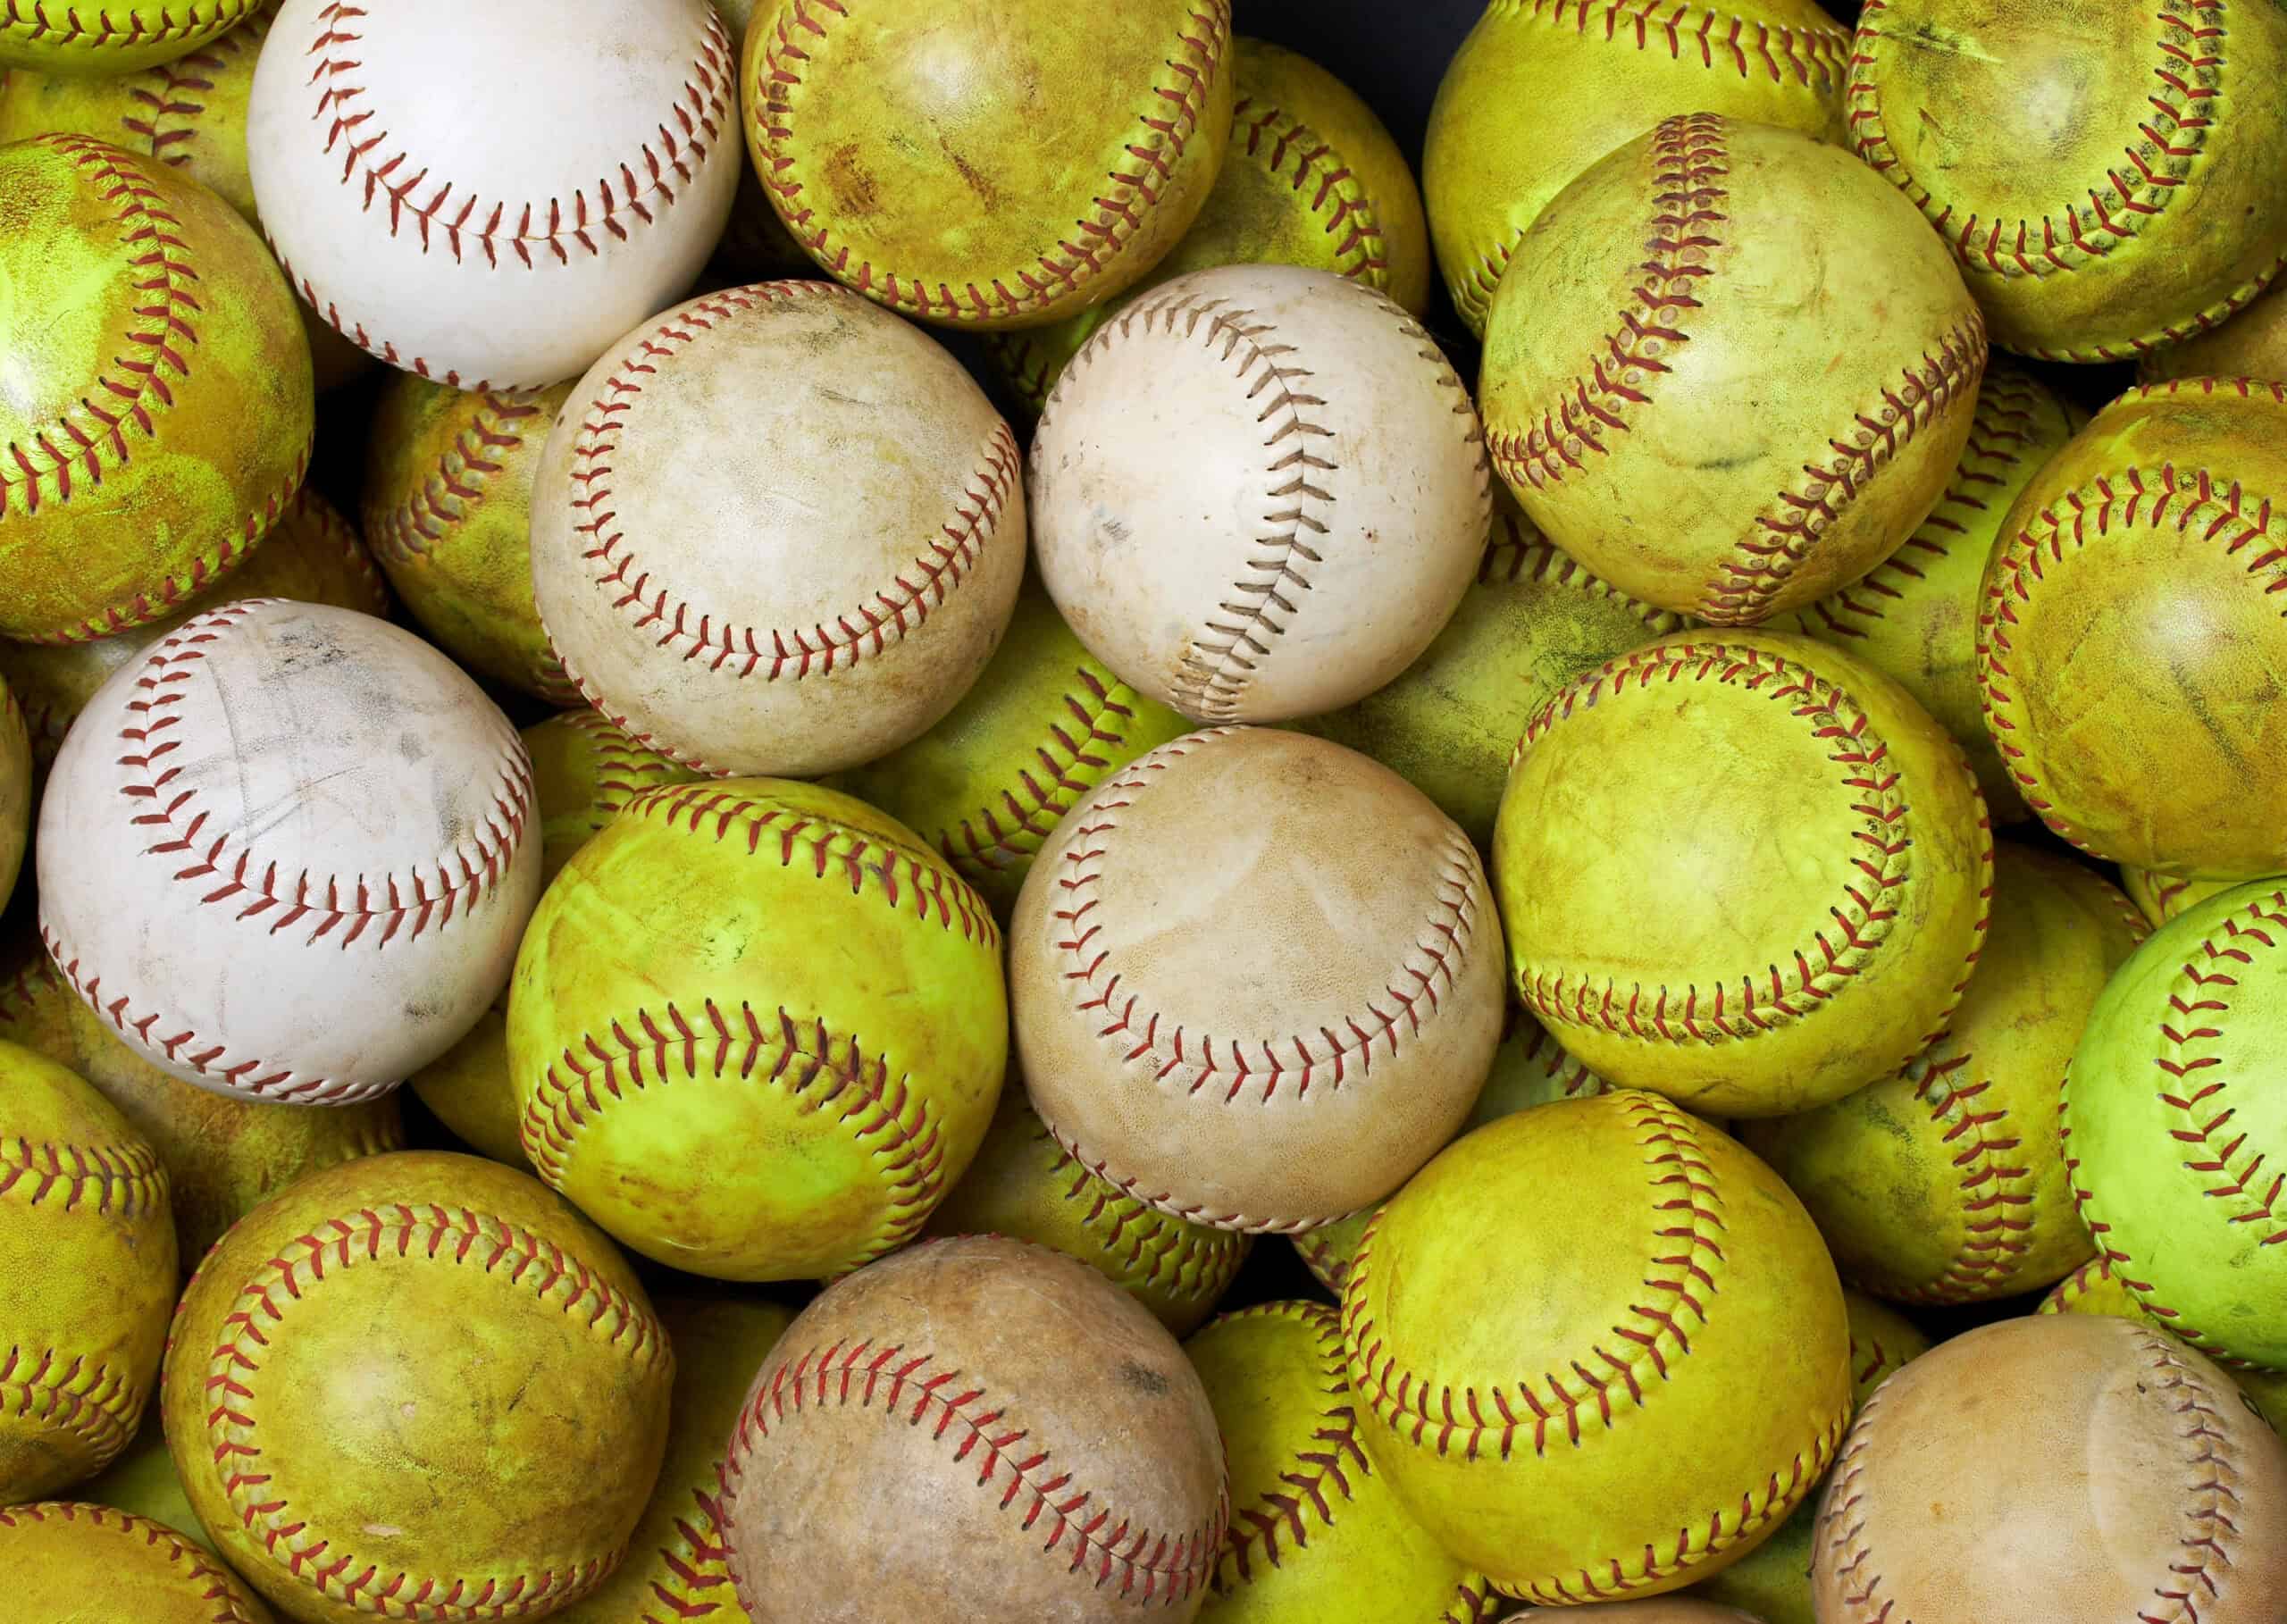 Biloxi Batter's Box softballs and baseballs